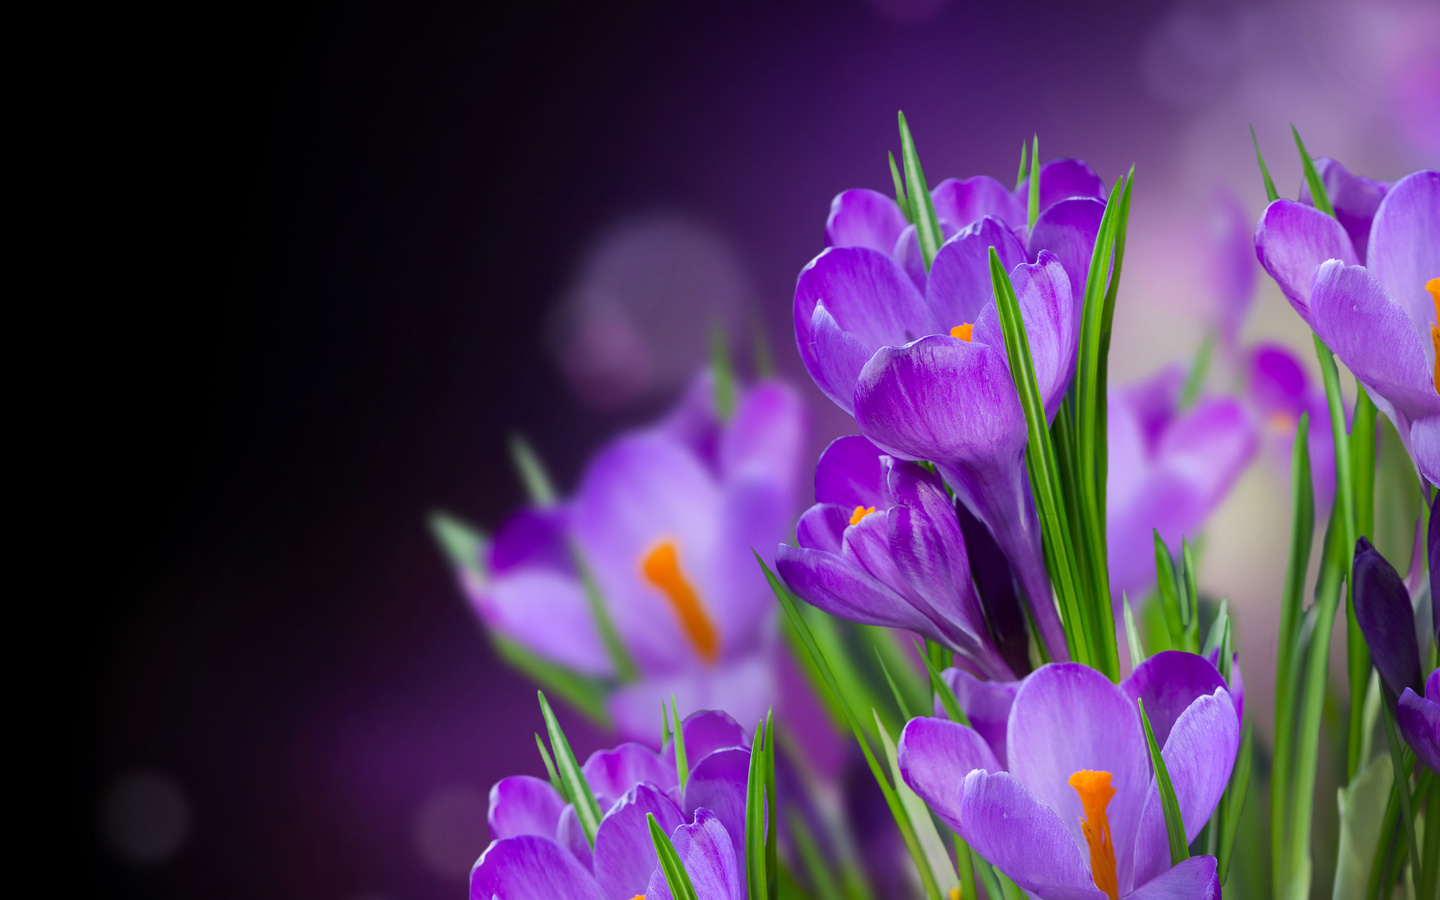 plants, violet, flowers wallpaper for mobile